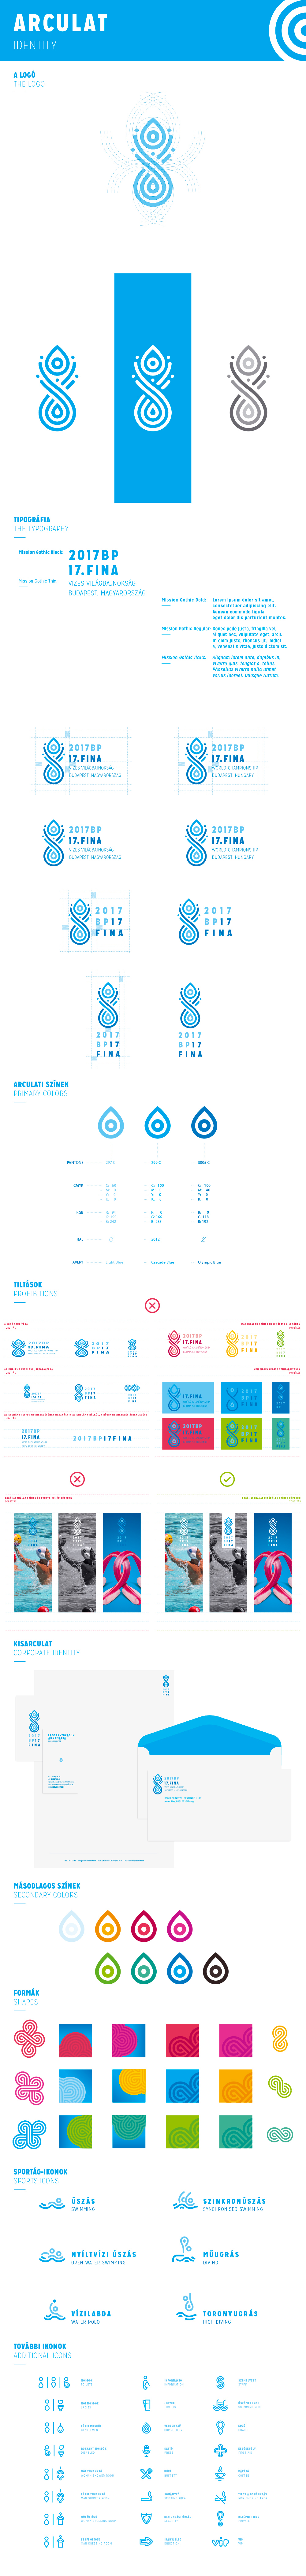 fina identity budapest world championship water geometric swim icon set Interior colorful sport infographic blue fresh